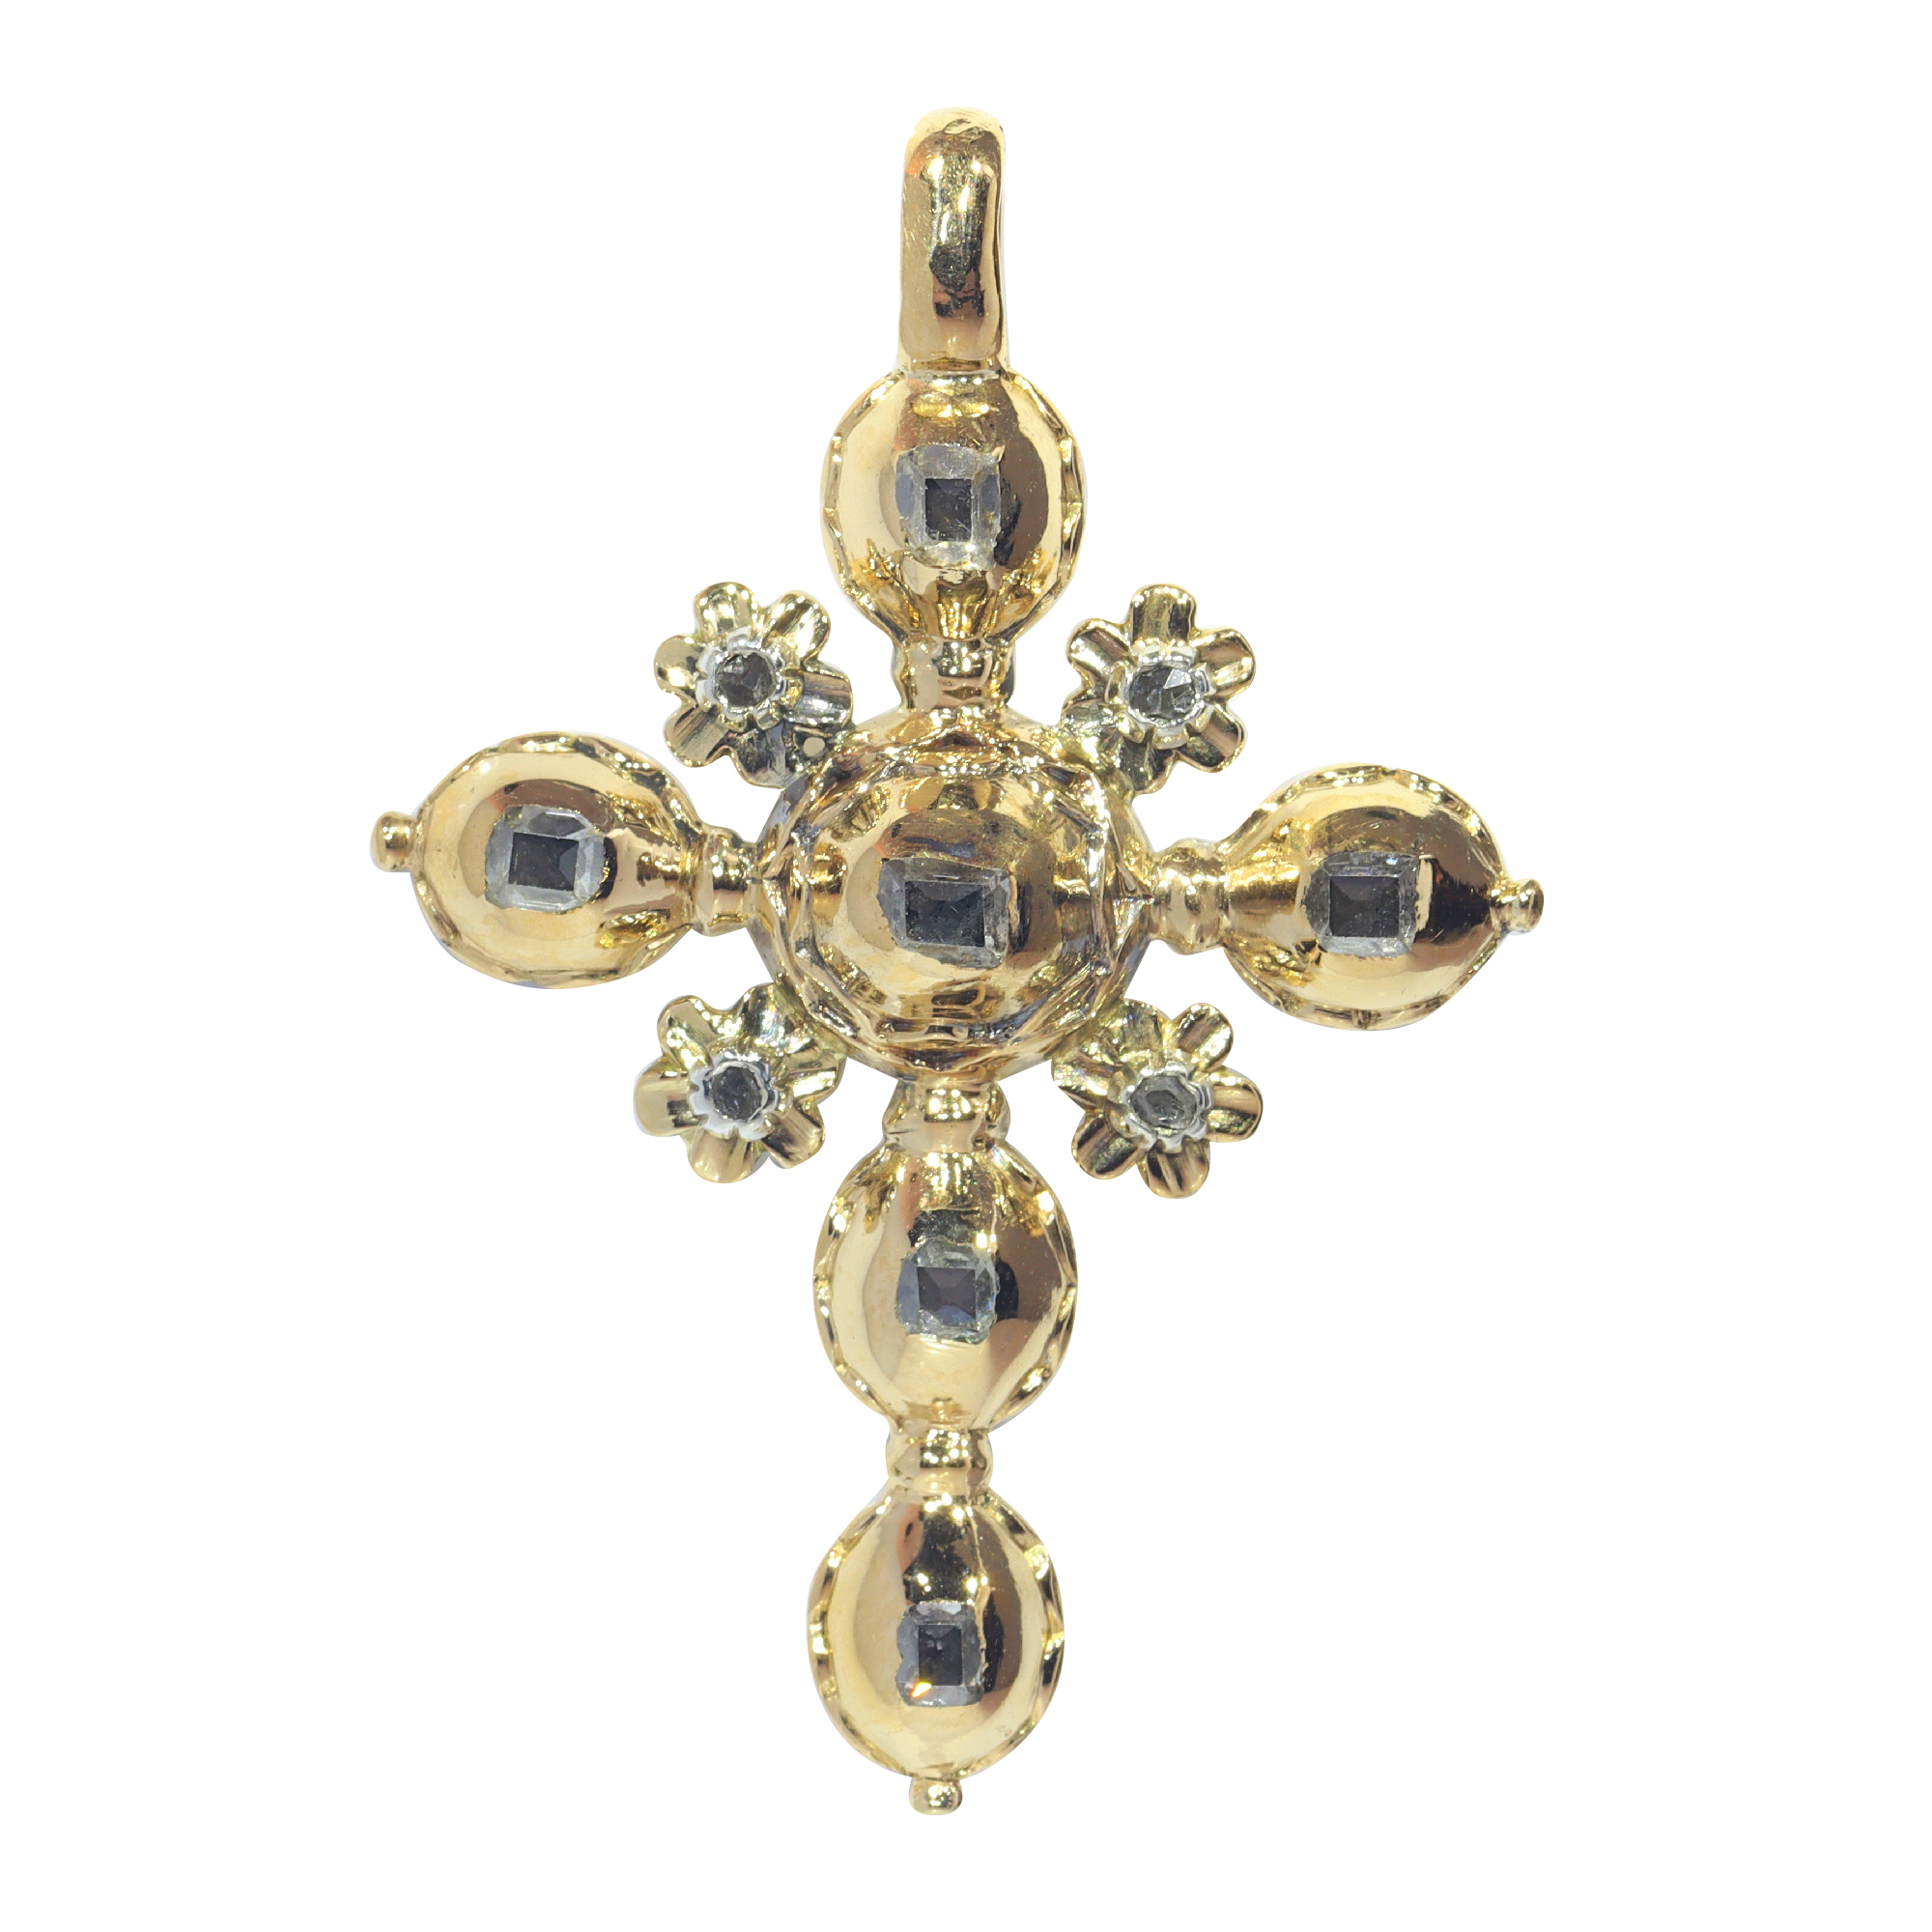 Diamonds of Devotion: Exploring a 1740 Belgian Diamond Cross